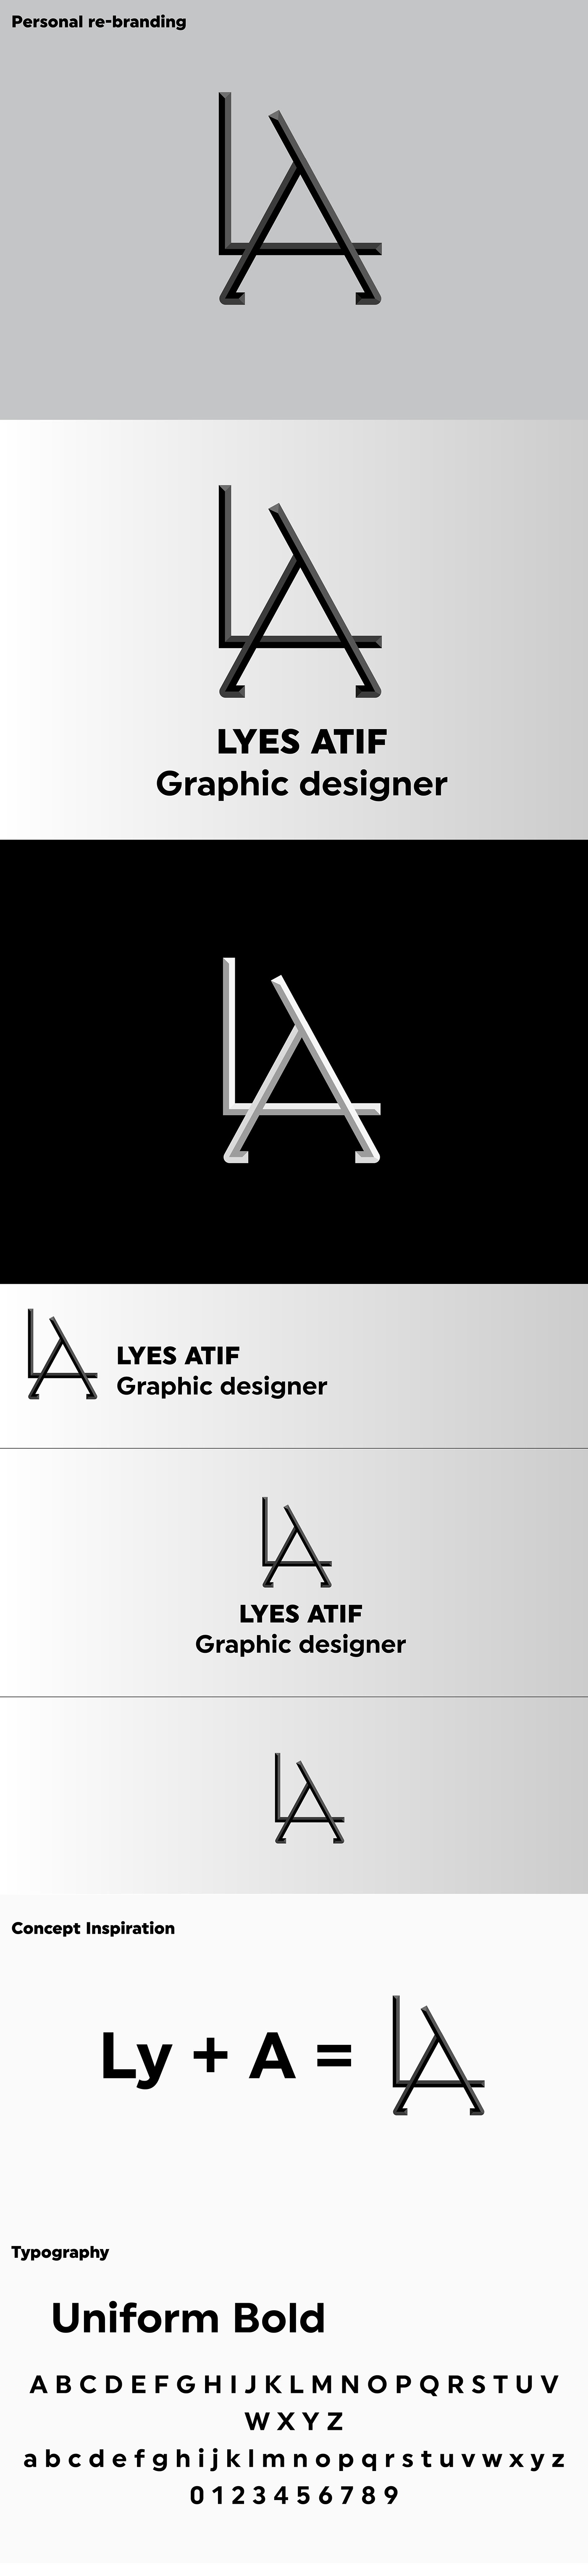 Personal Rebranding / Lyes Atif Designs on Behance